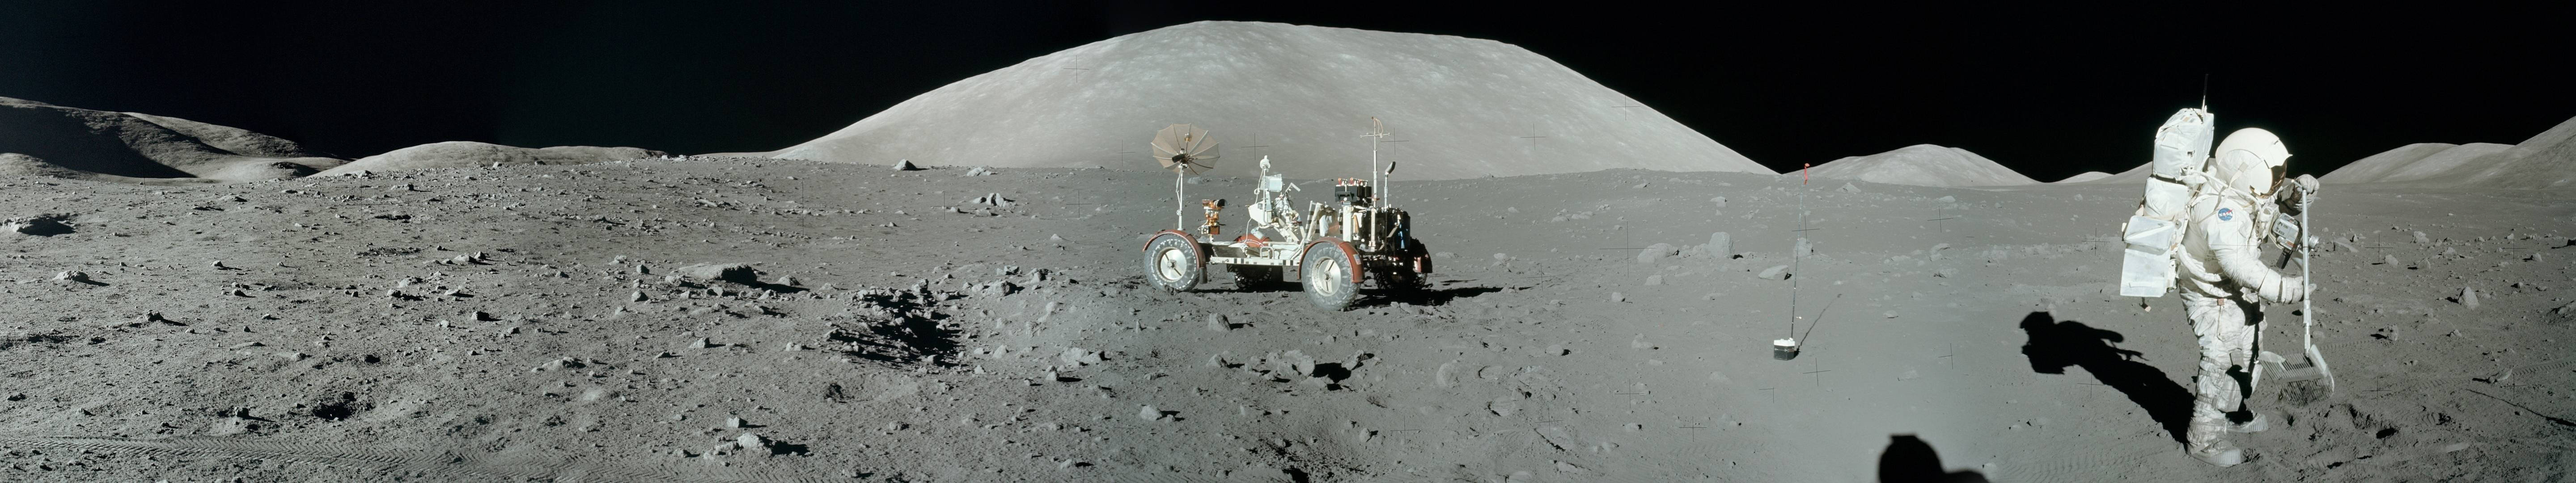 3 Monitor Man On Moon Background